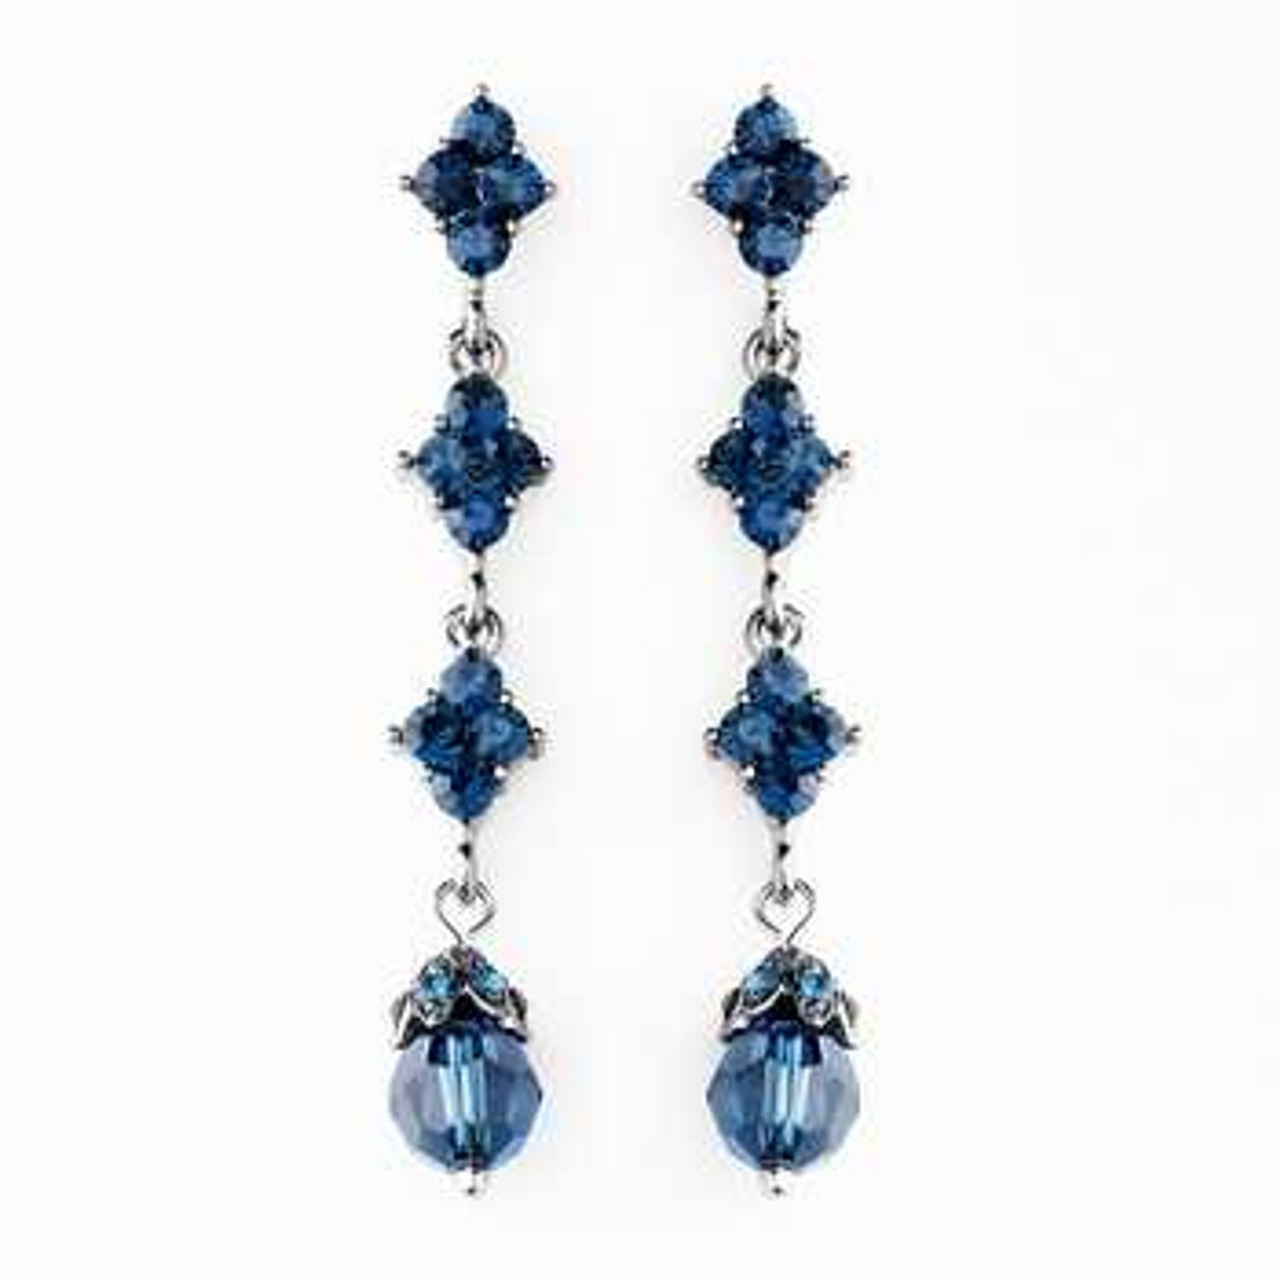 Discover 257+ cheap navy blue earrings best